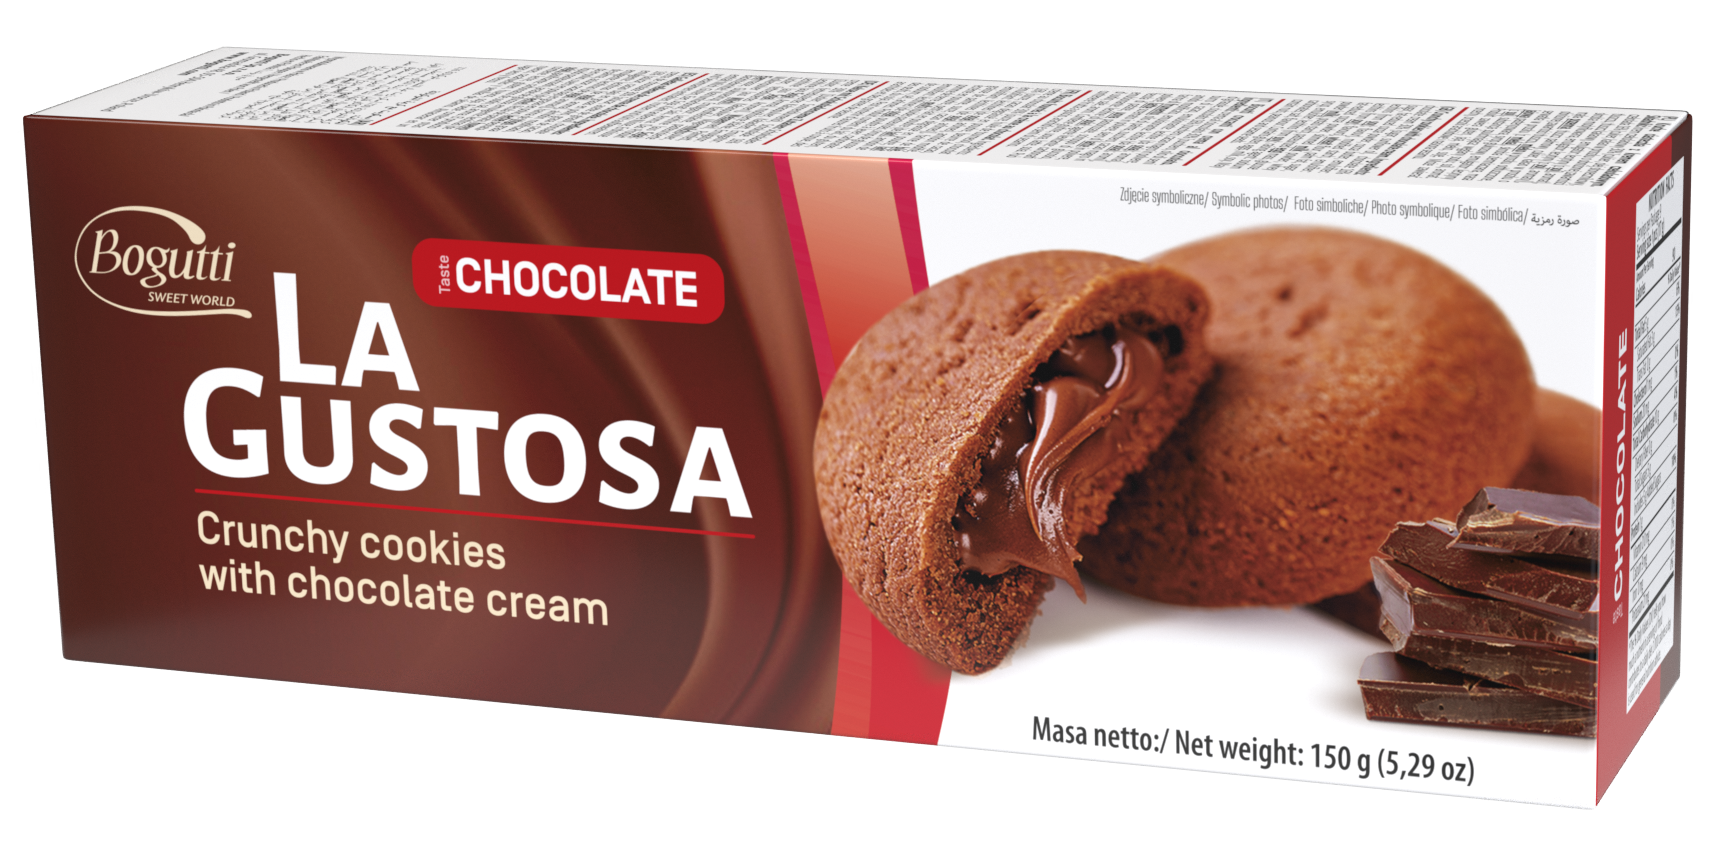 La Gustosa – Crunchy cookies with chocolate cream